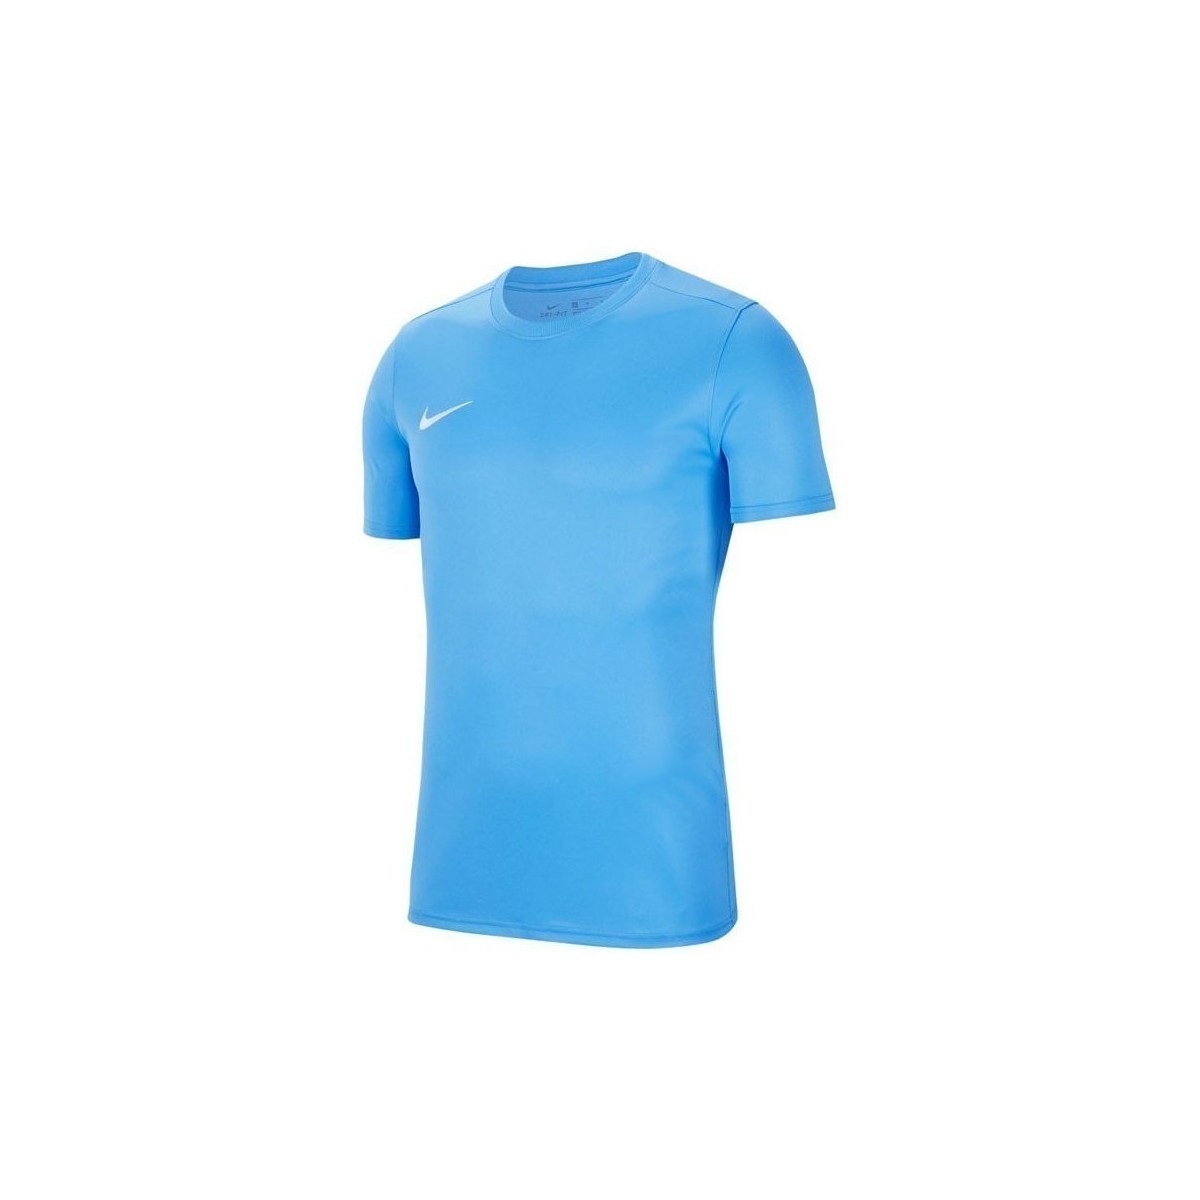 Textil Chlapecké Trička s krátkým rukávem Nike JR Dry Park Vii Modrá